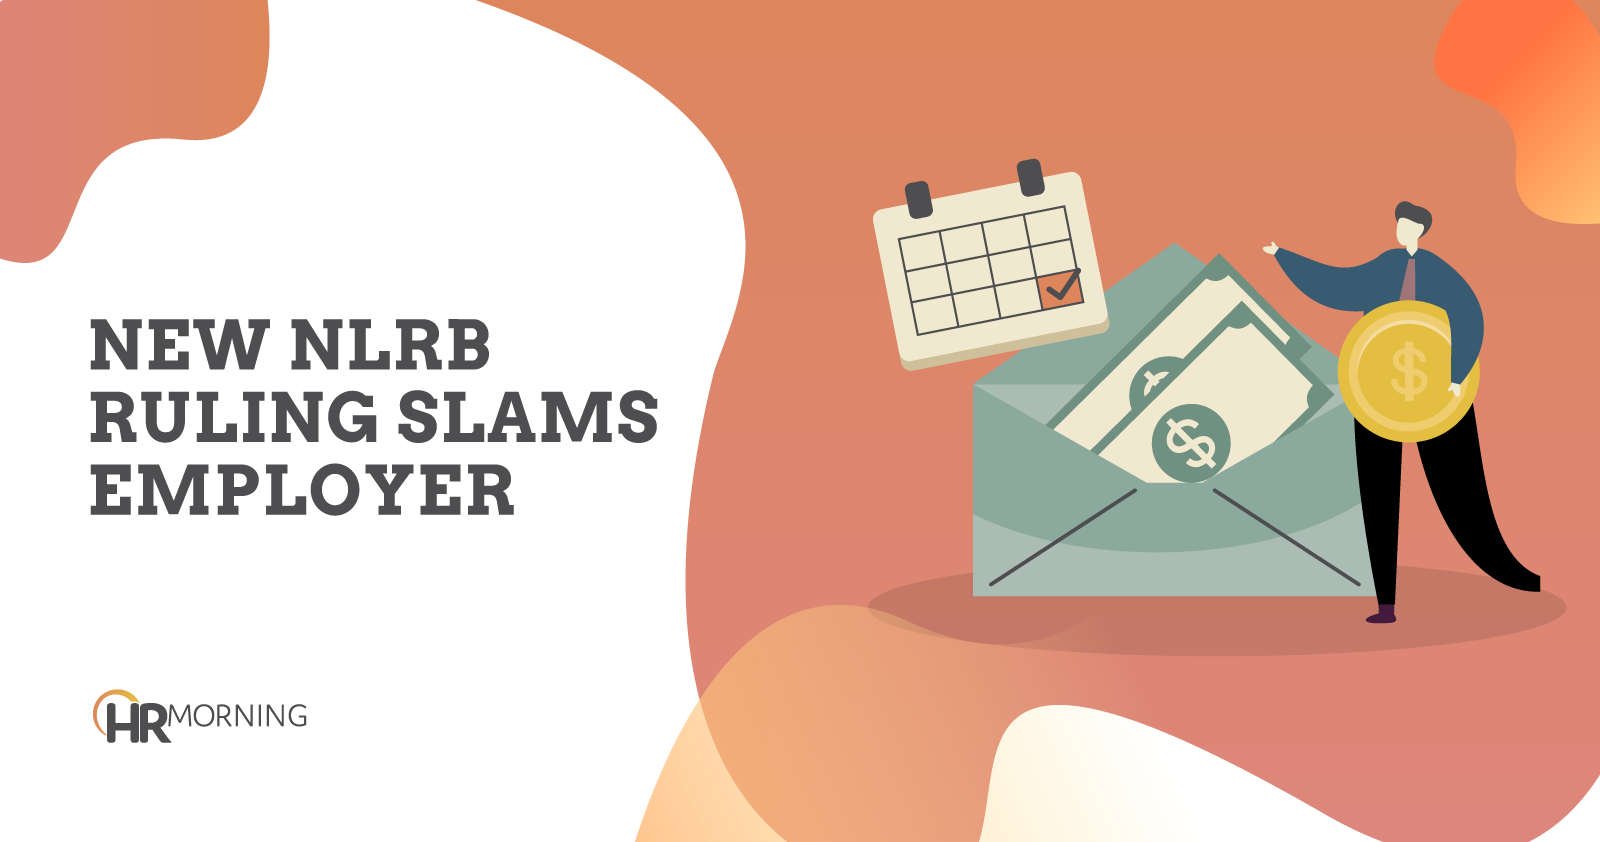 New NLRB ruling slams employer